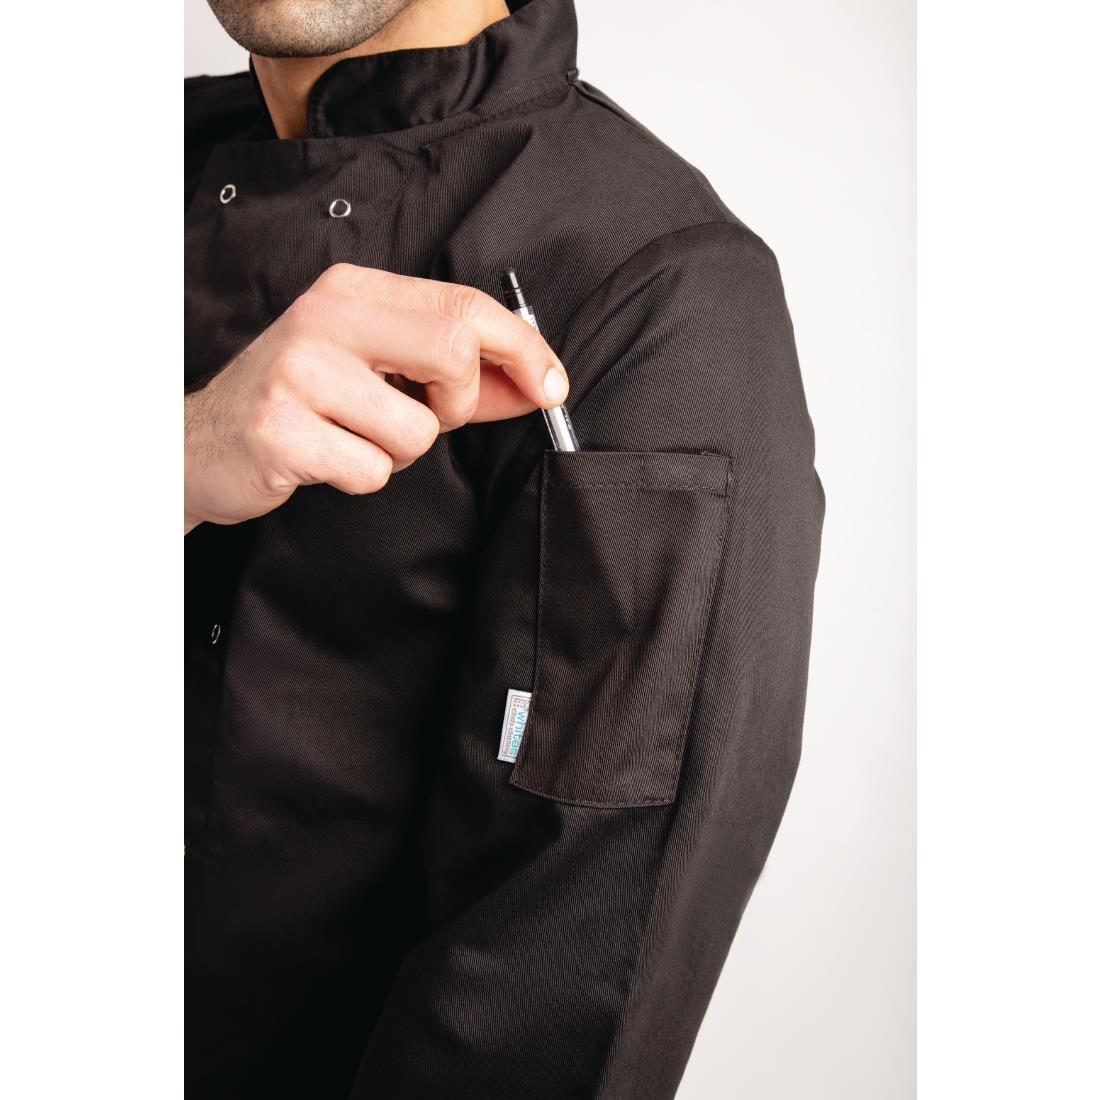 Whites Vegas Unisex Chefs Jacket Long Sleeve Black L - A438-L  - 9